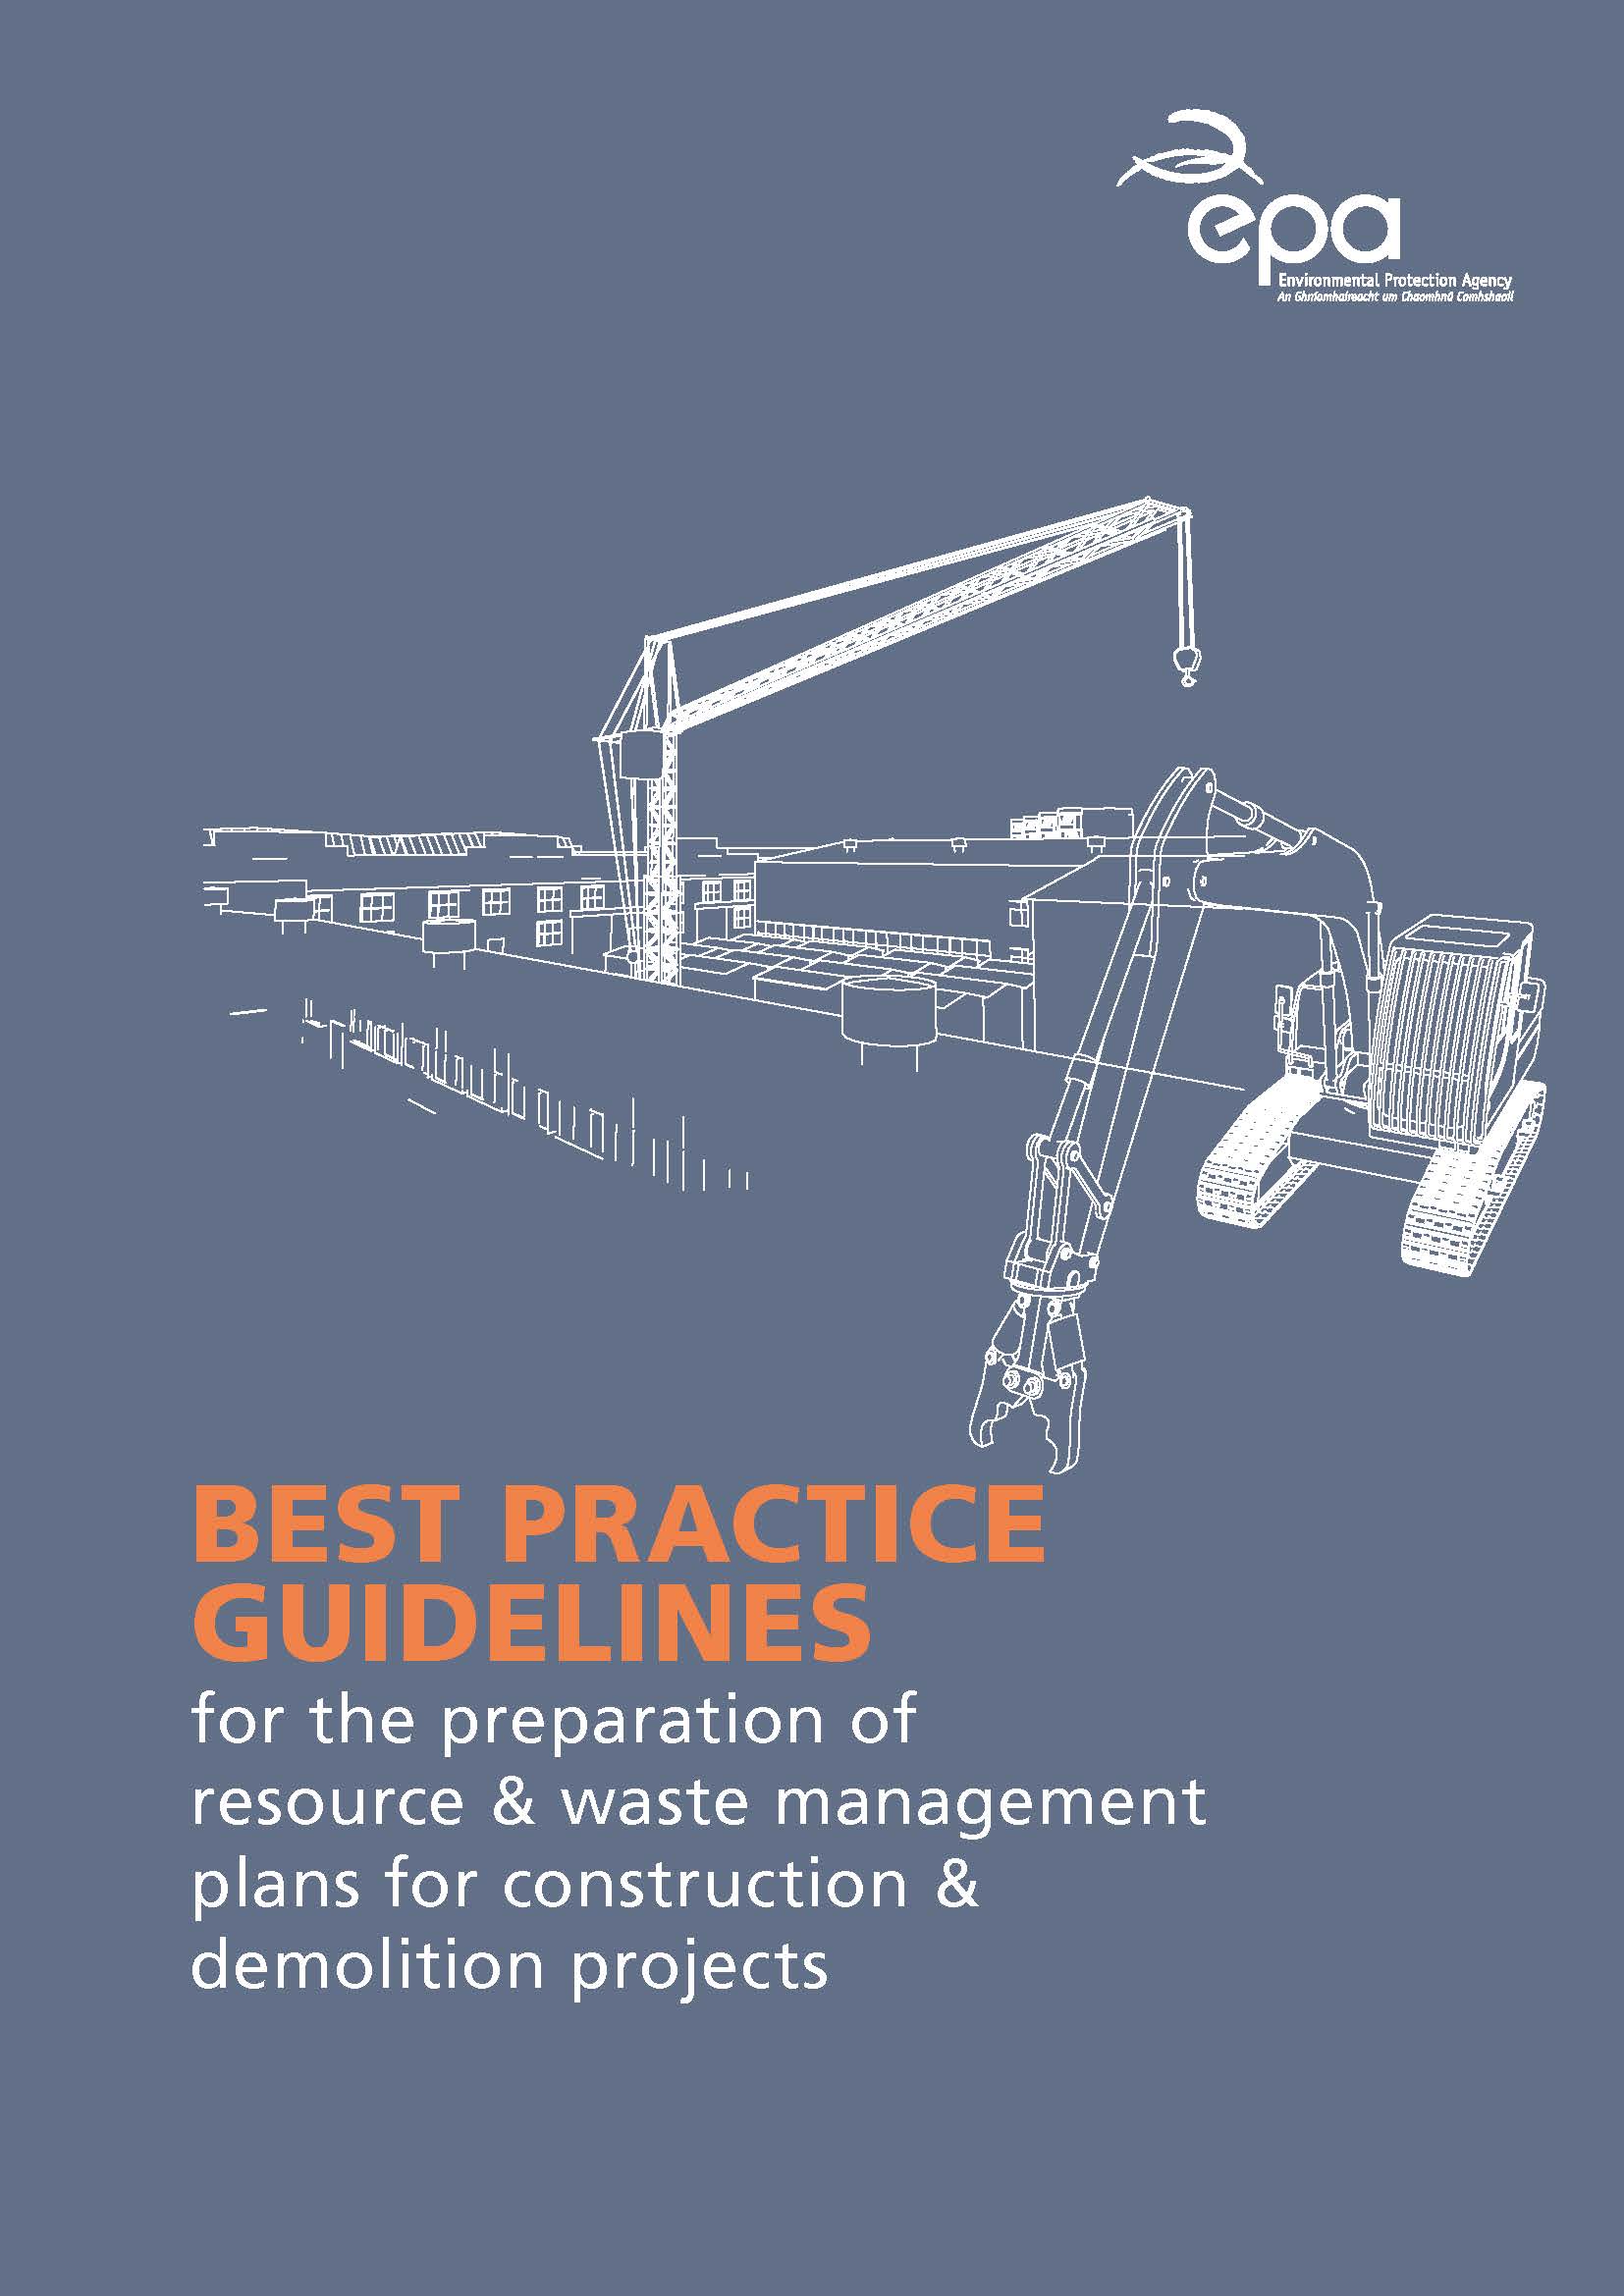 C&D Waste Guidelines image